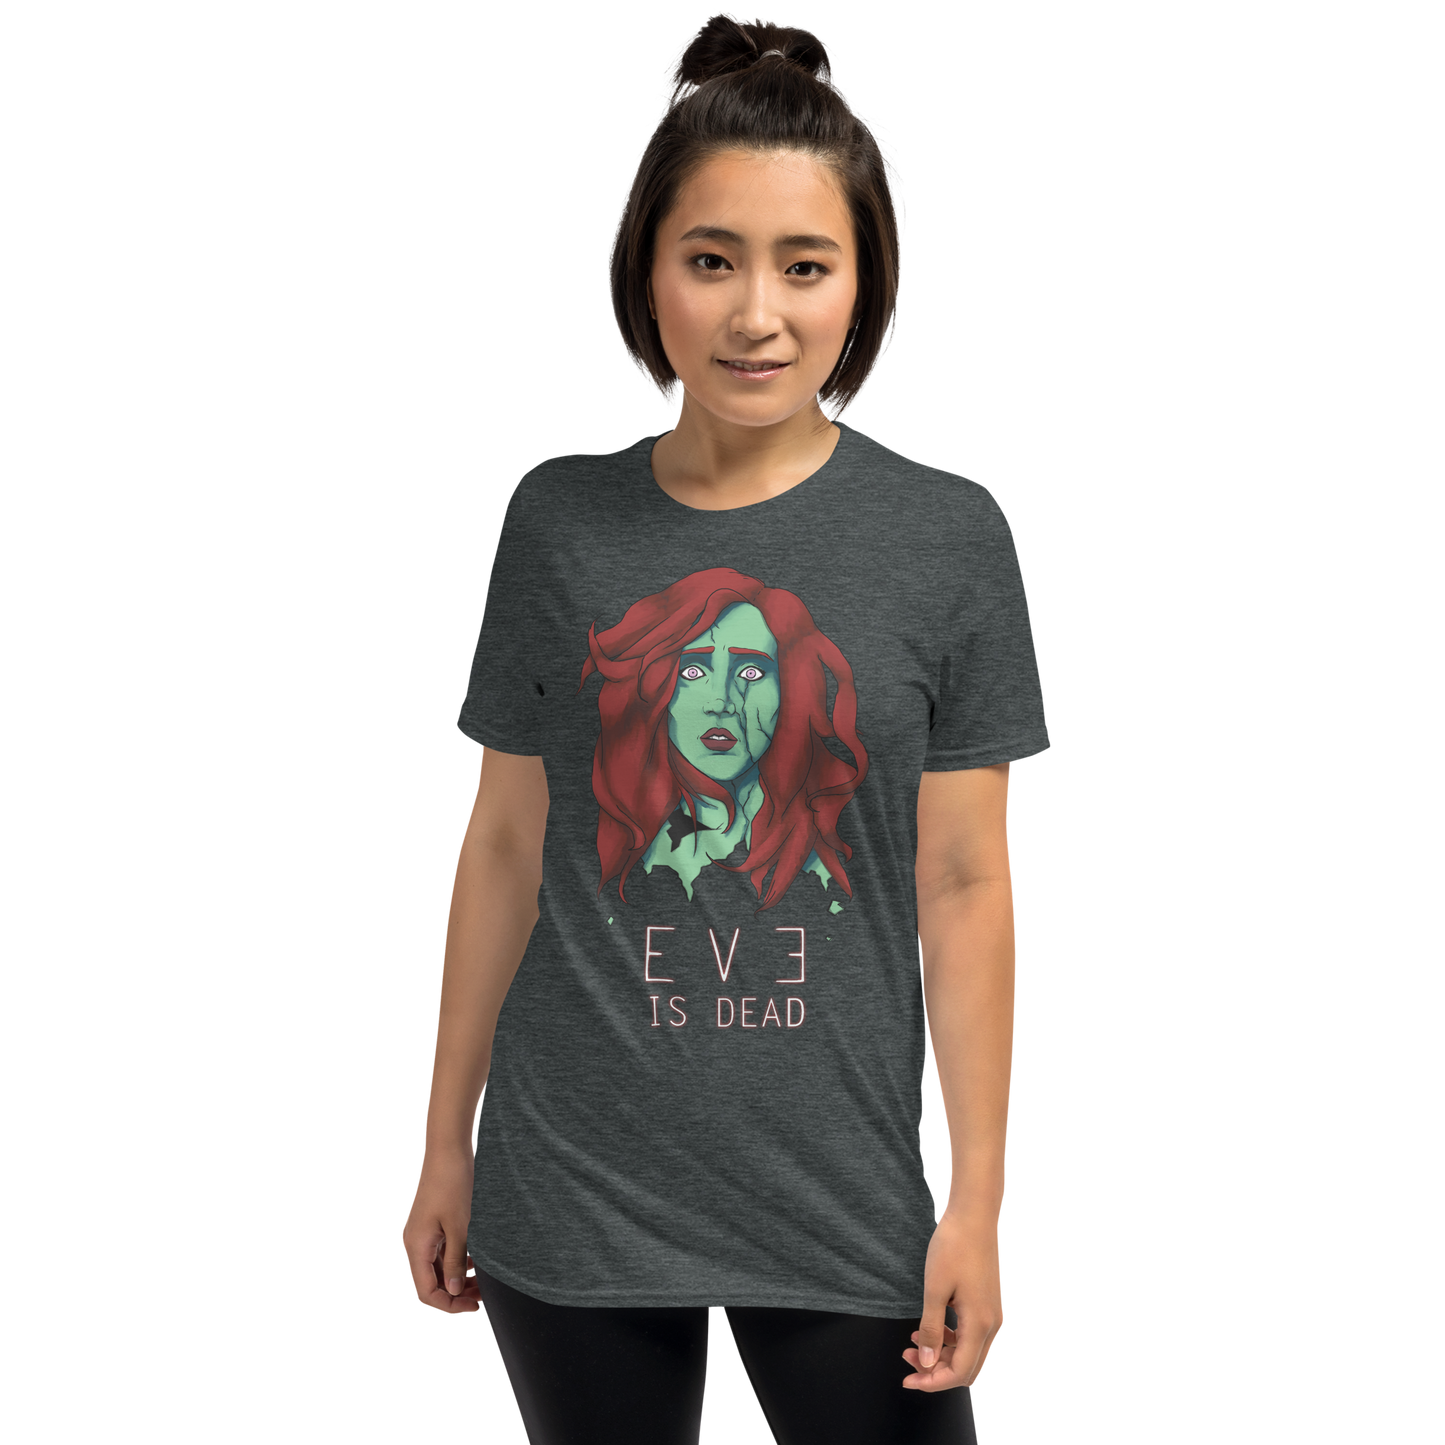 Eve is Dead Unisex T-Shirt